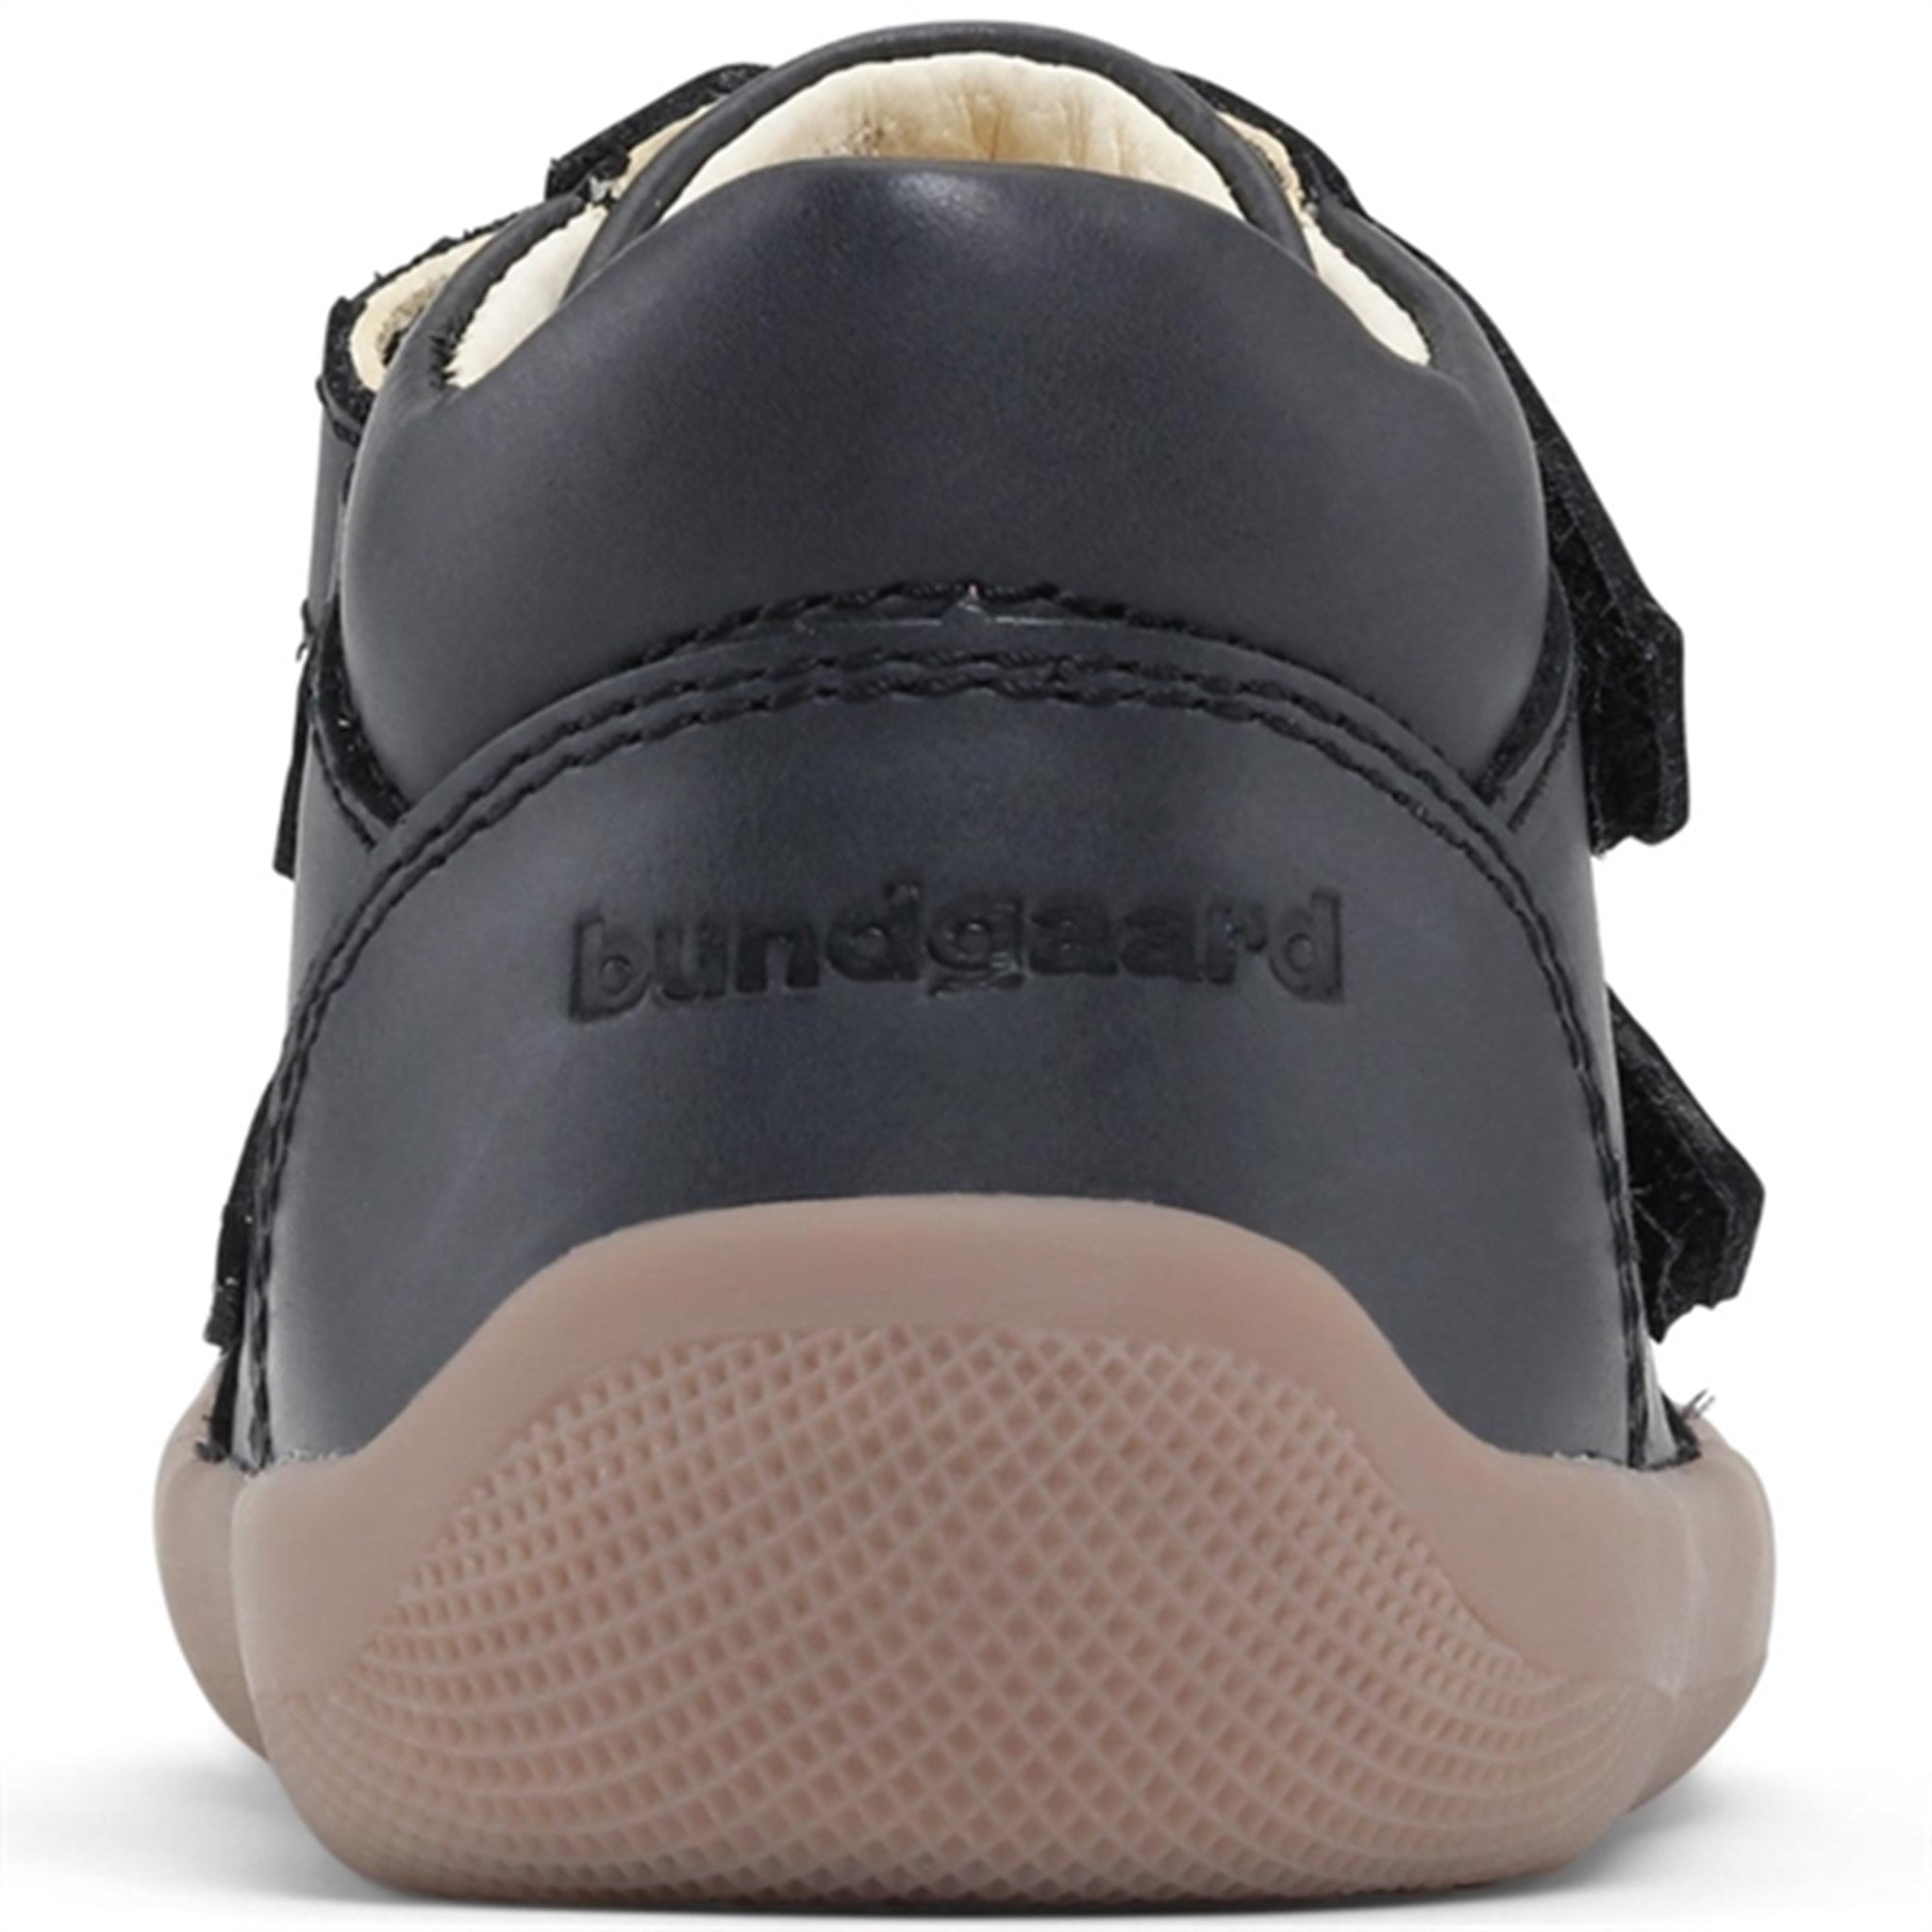 Bundgaard The Walk Kardborre Black Shoes 5